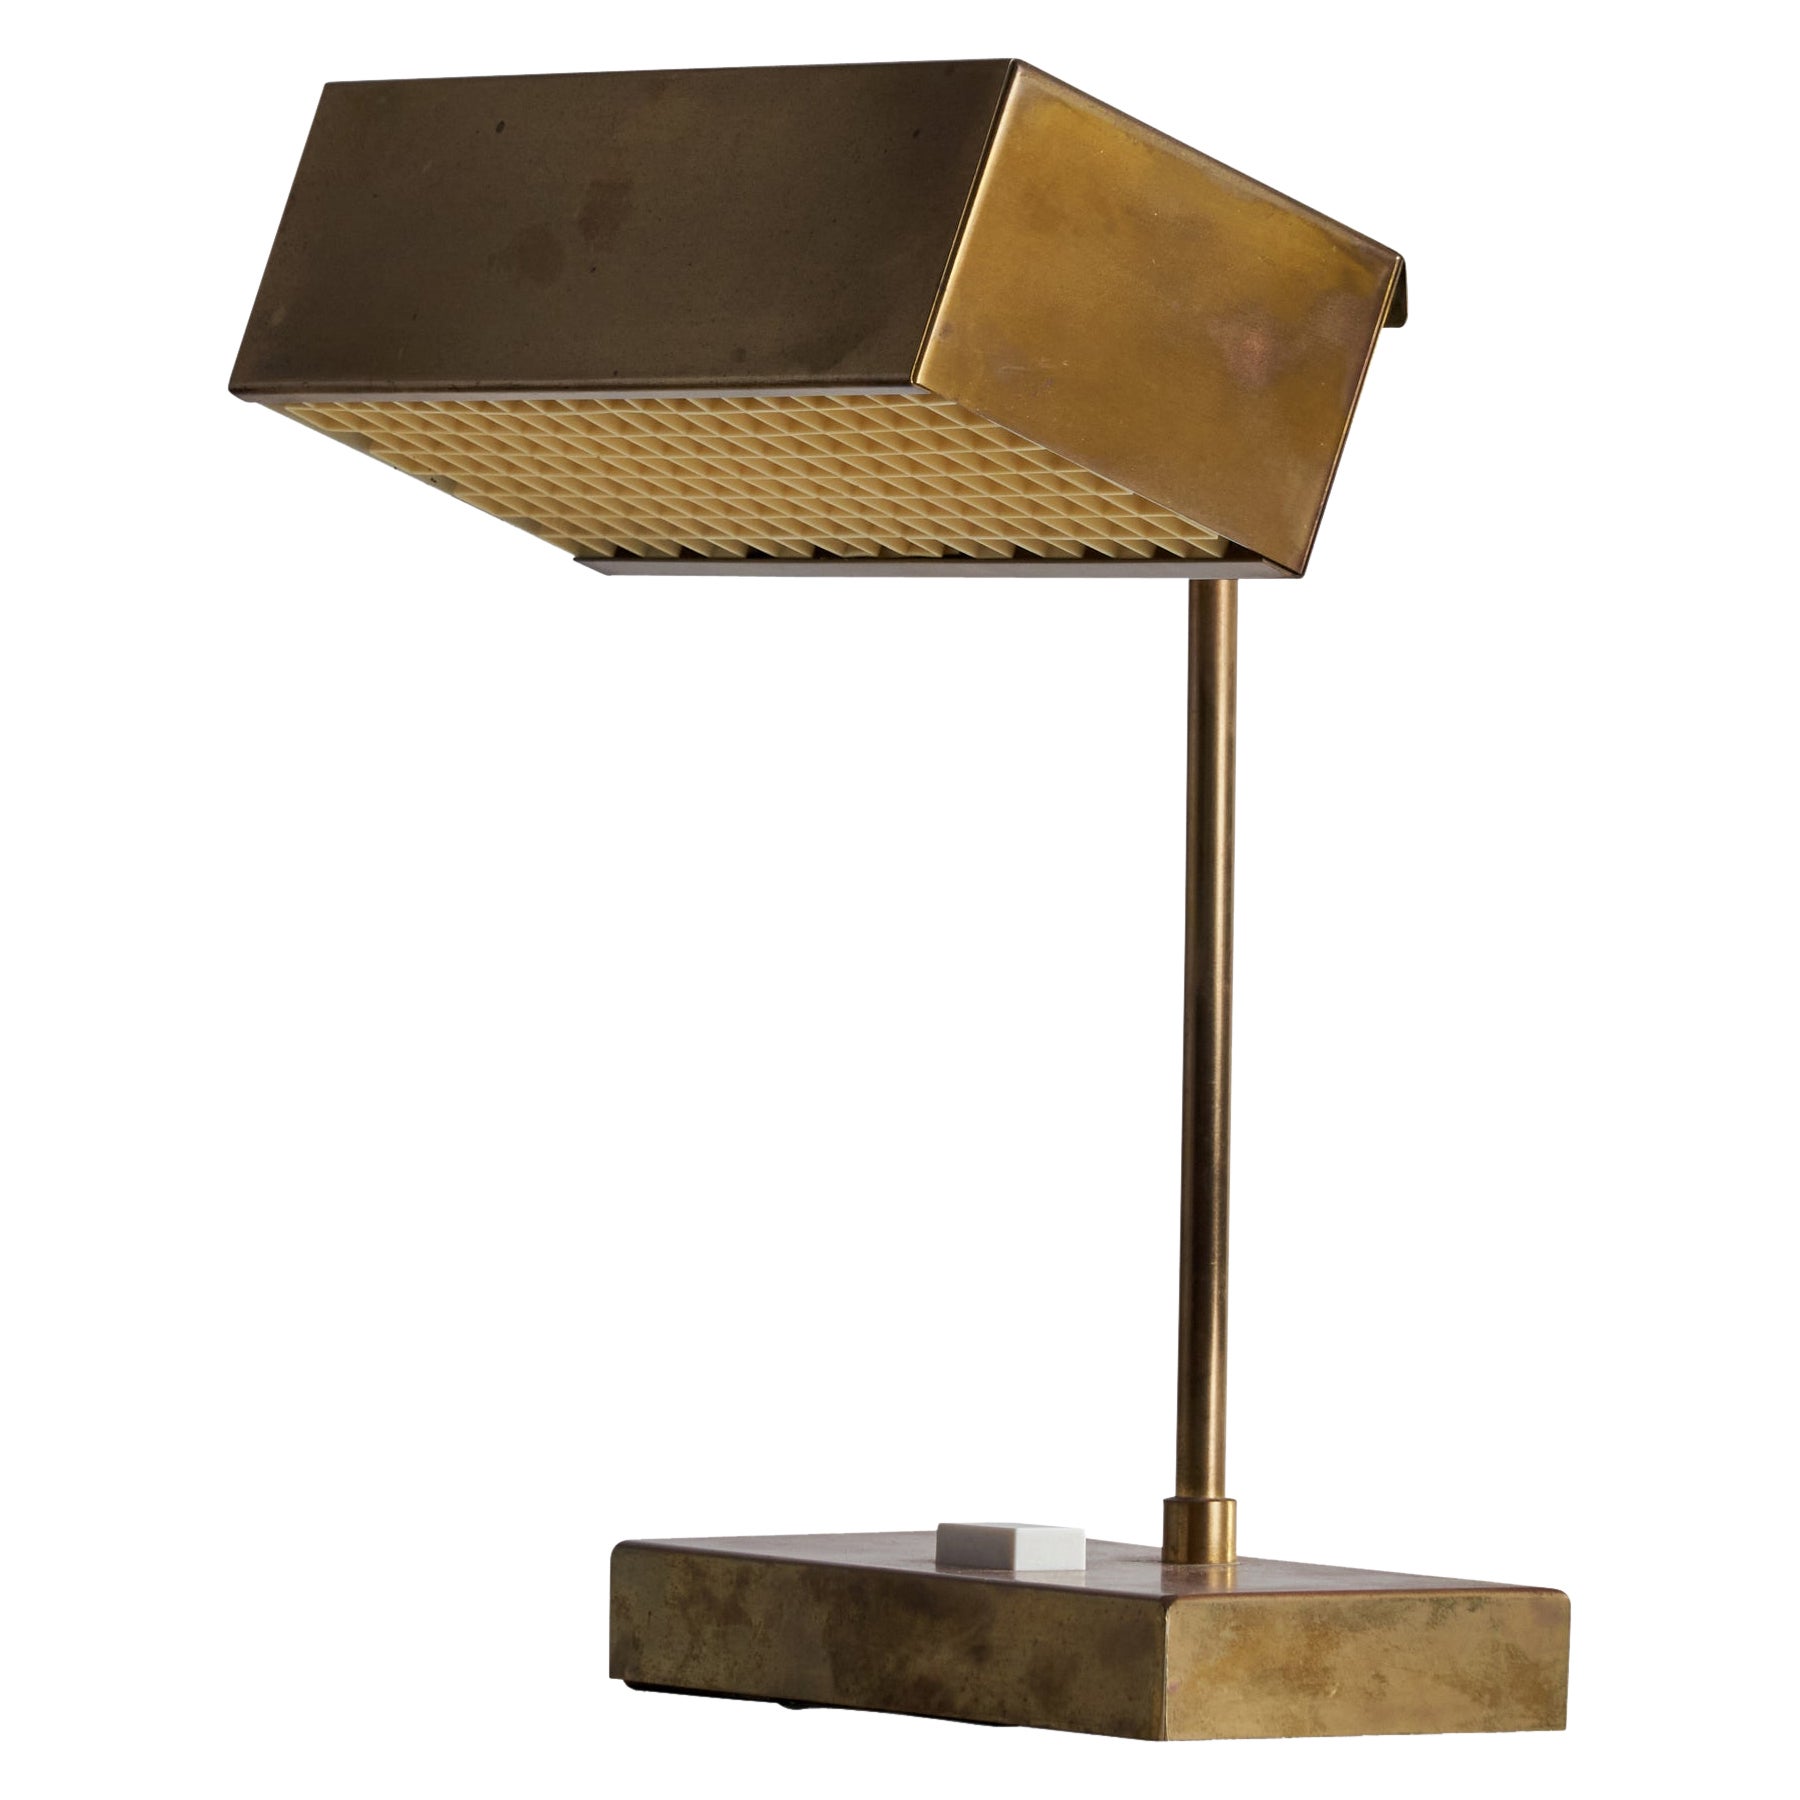 Björn Svensson, “Elidus” Table Lamp, Brass, Sweden, 1970s